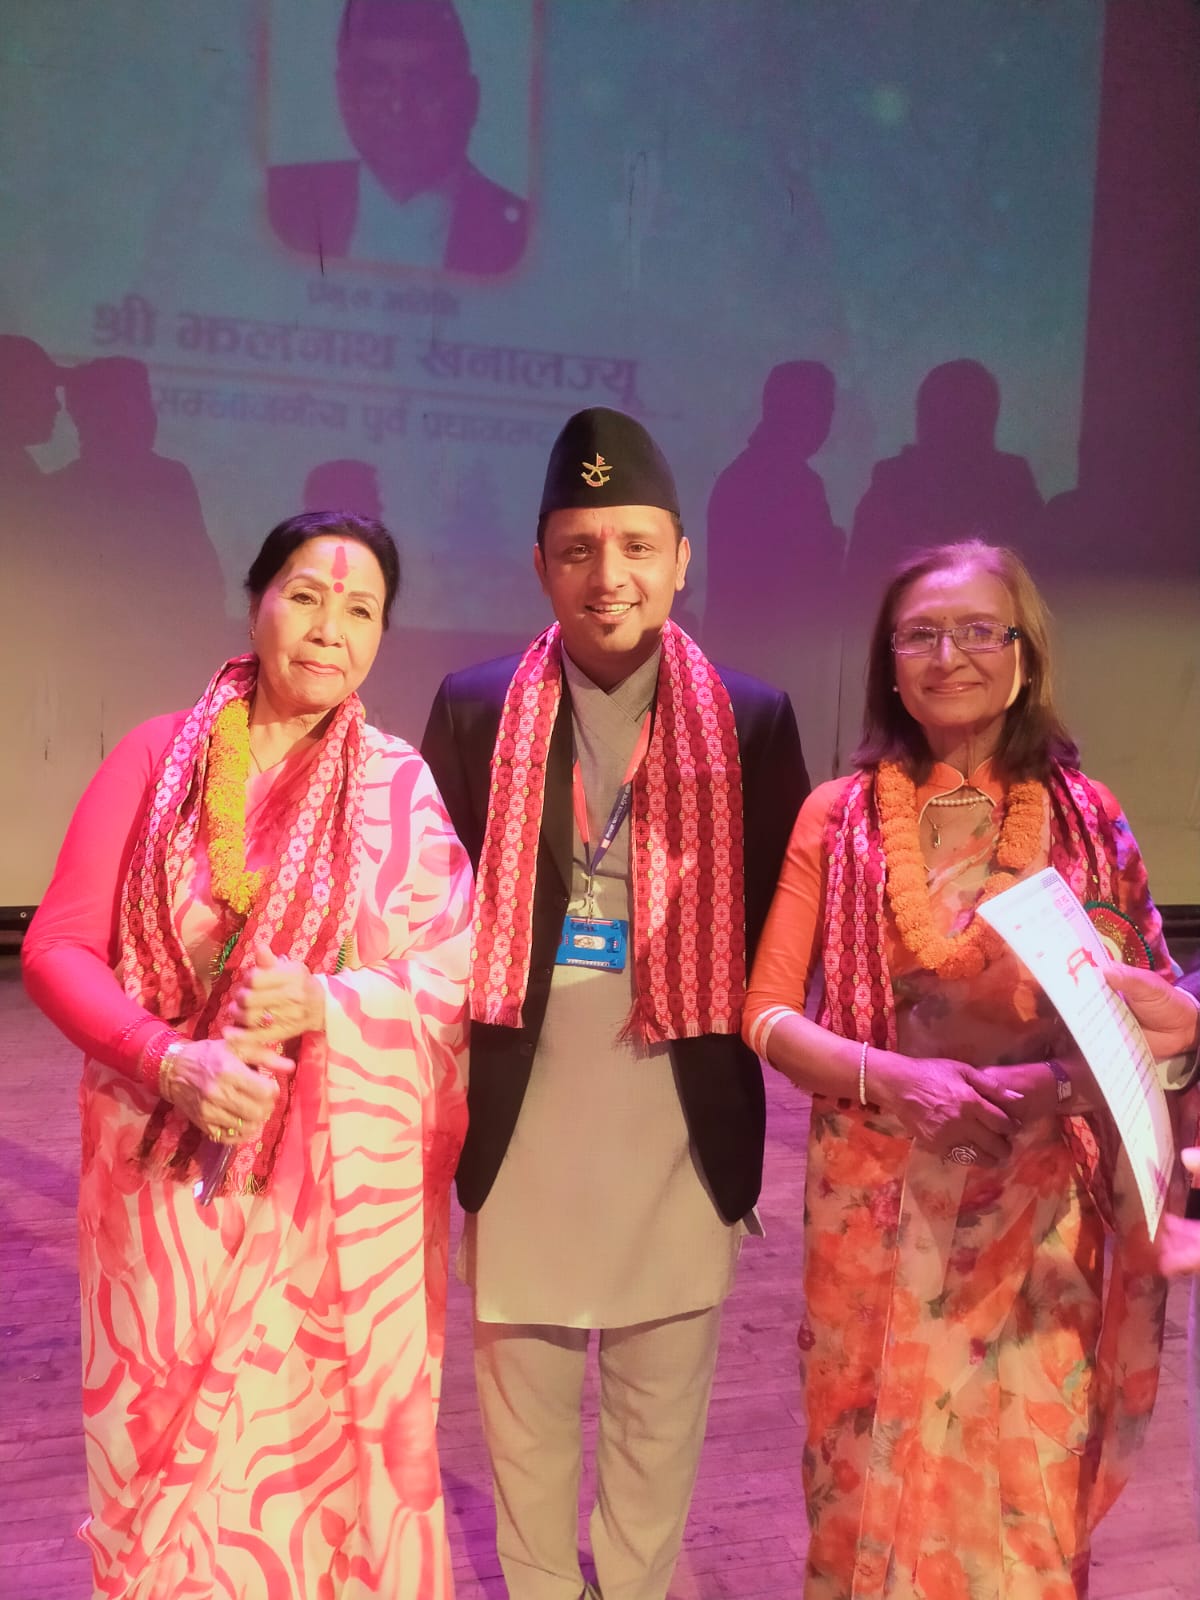 Ram Bahadur Thapa: A gem of Nepali dancing stages